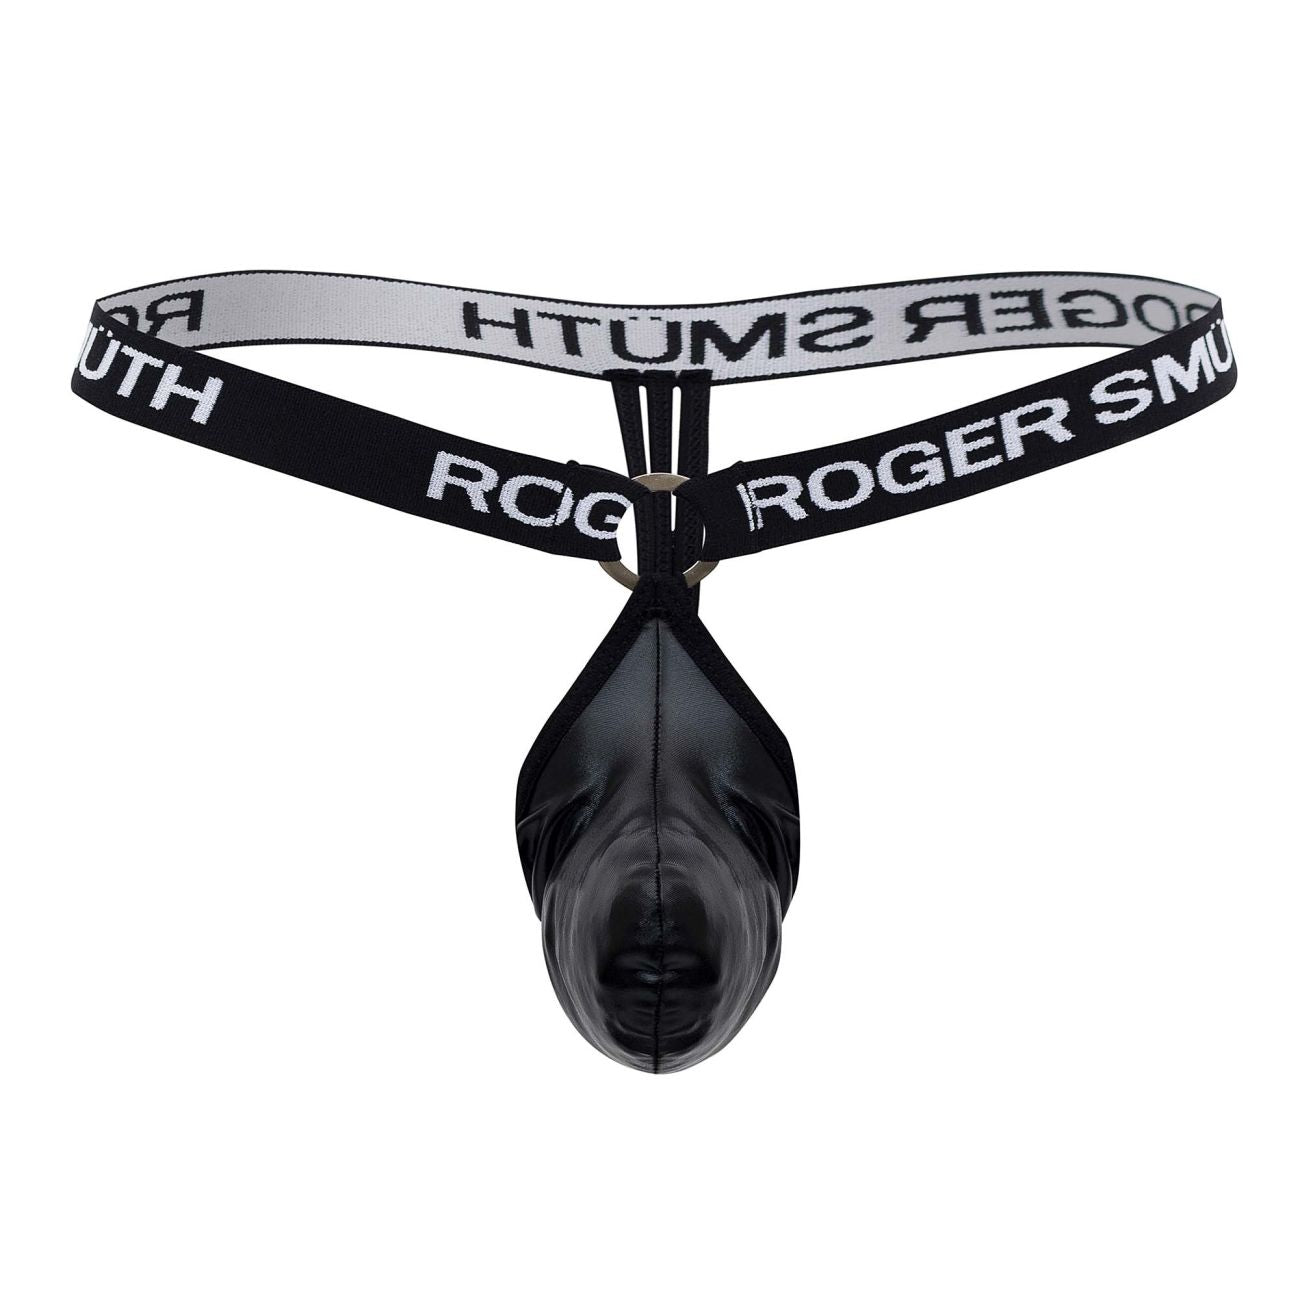 Roger Smuth RS079 G-String Black